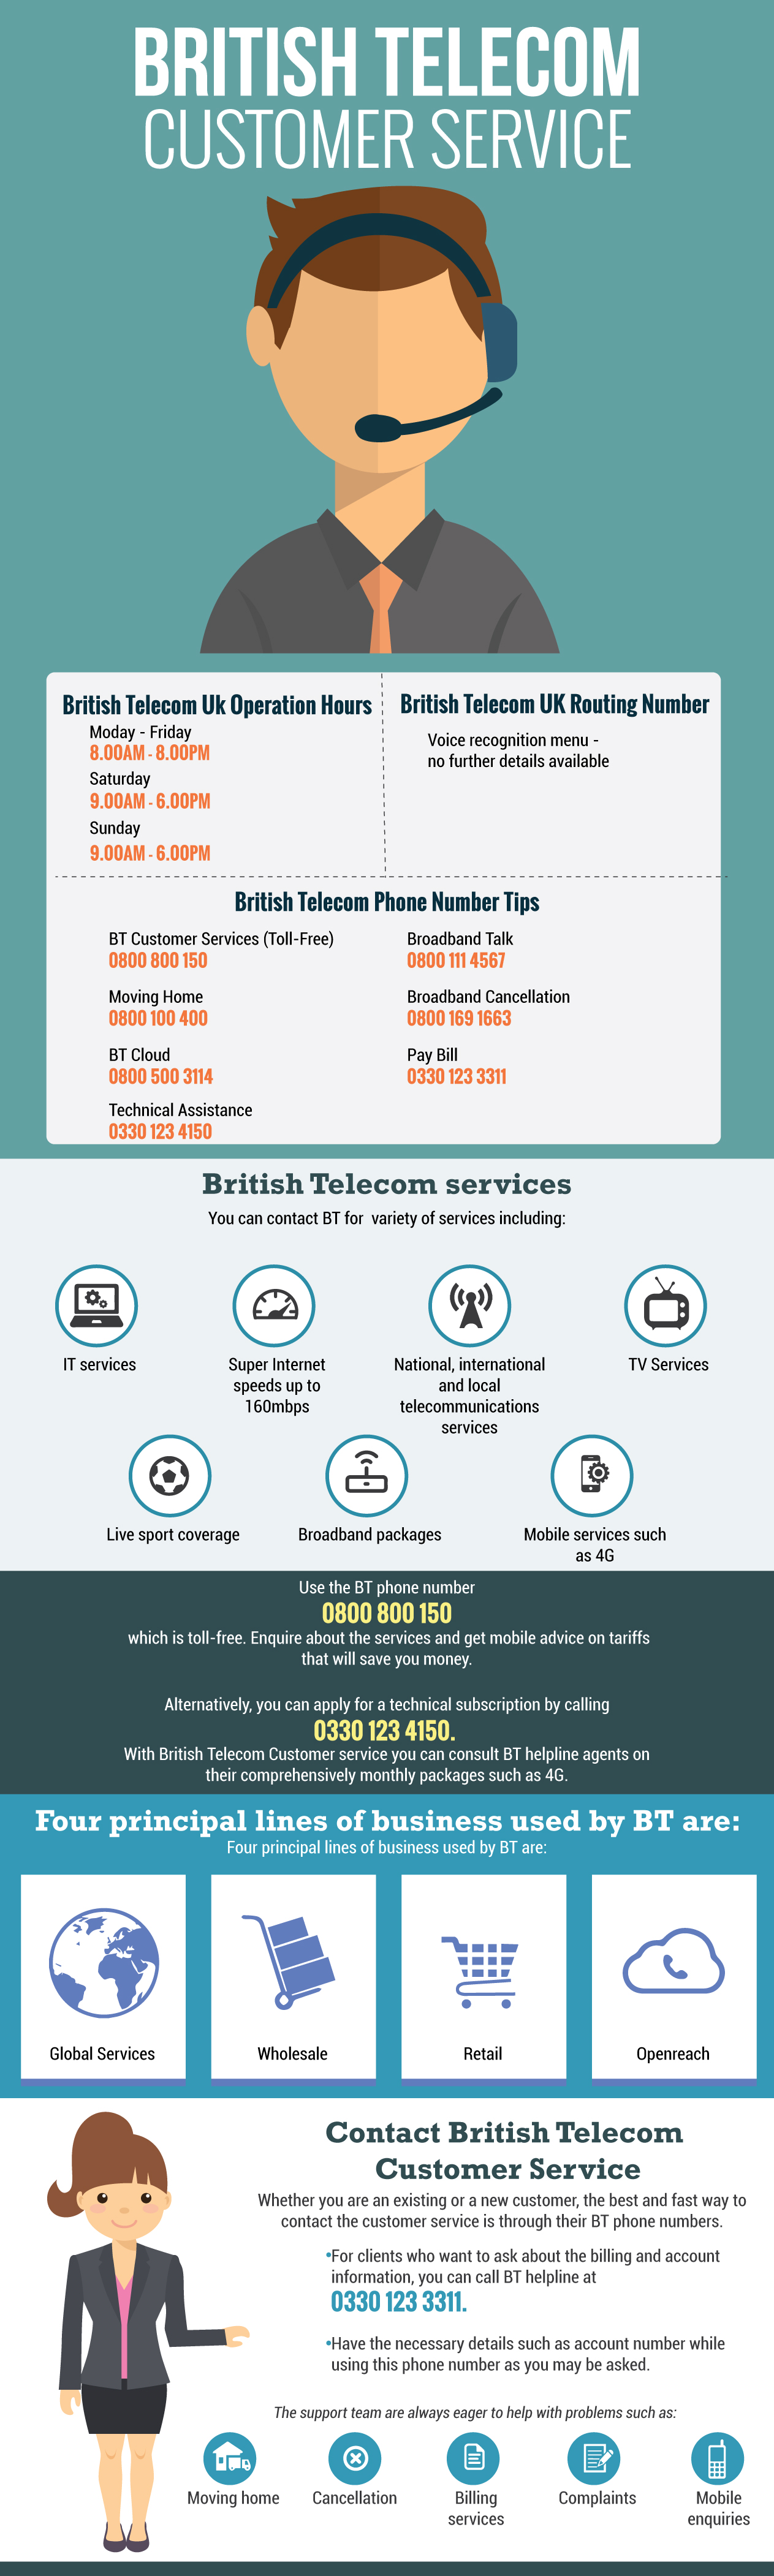 British Telecom Contact Number